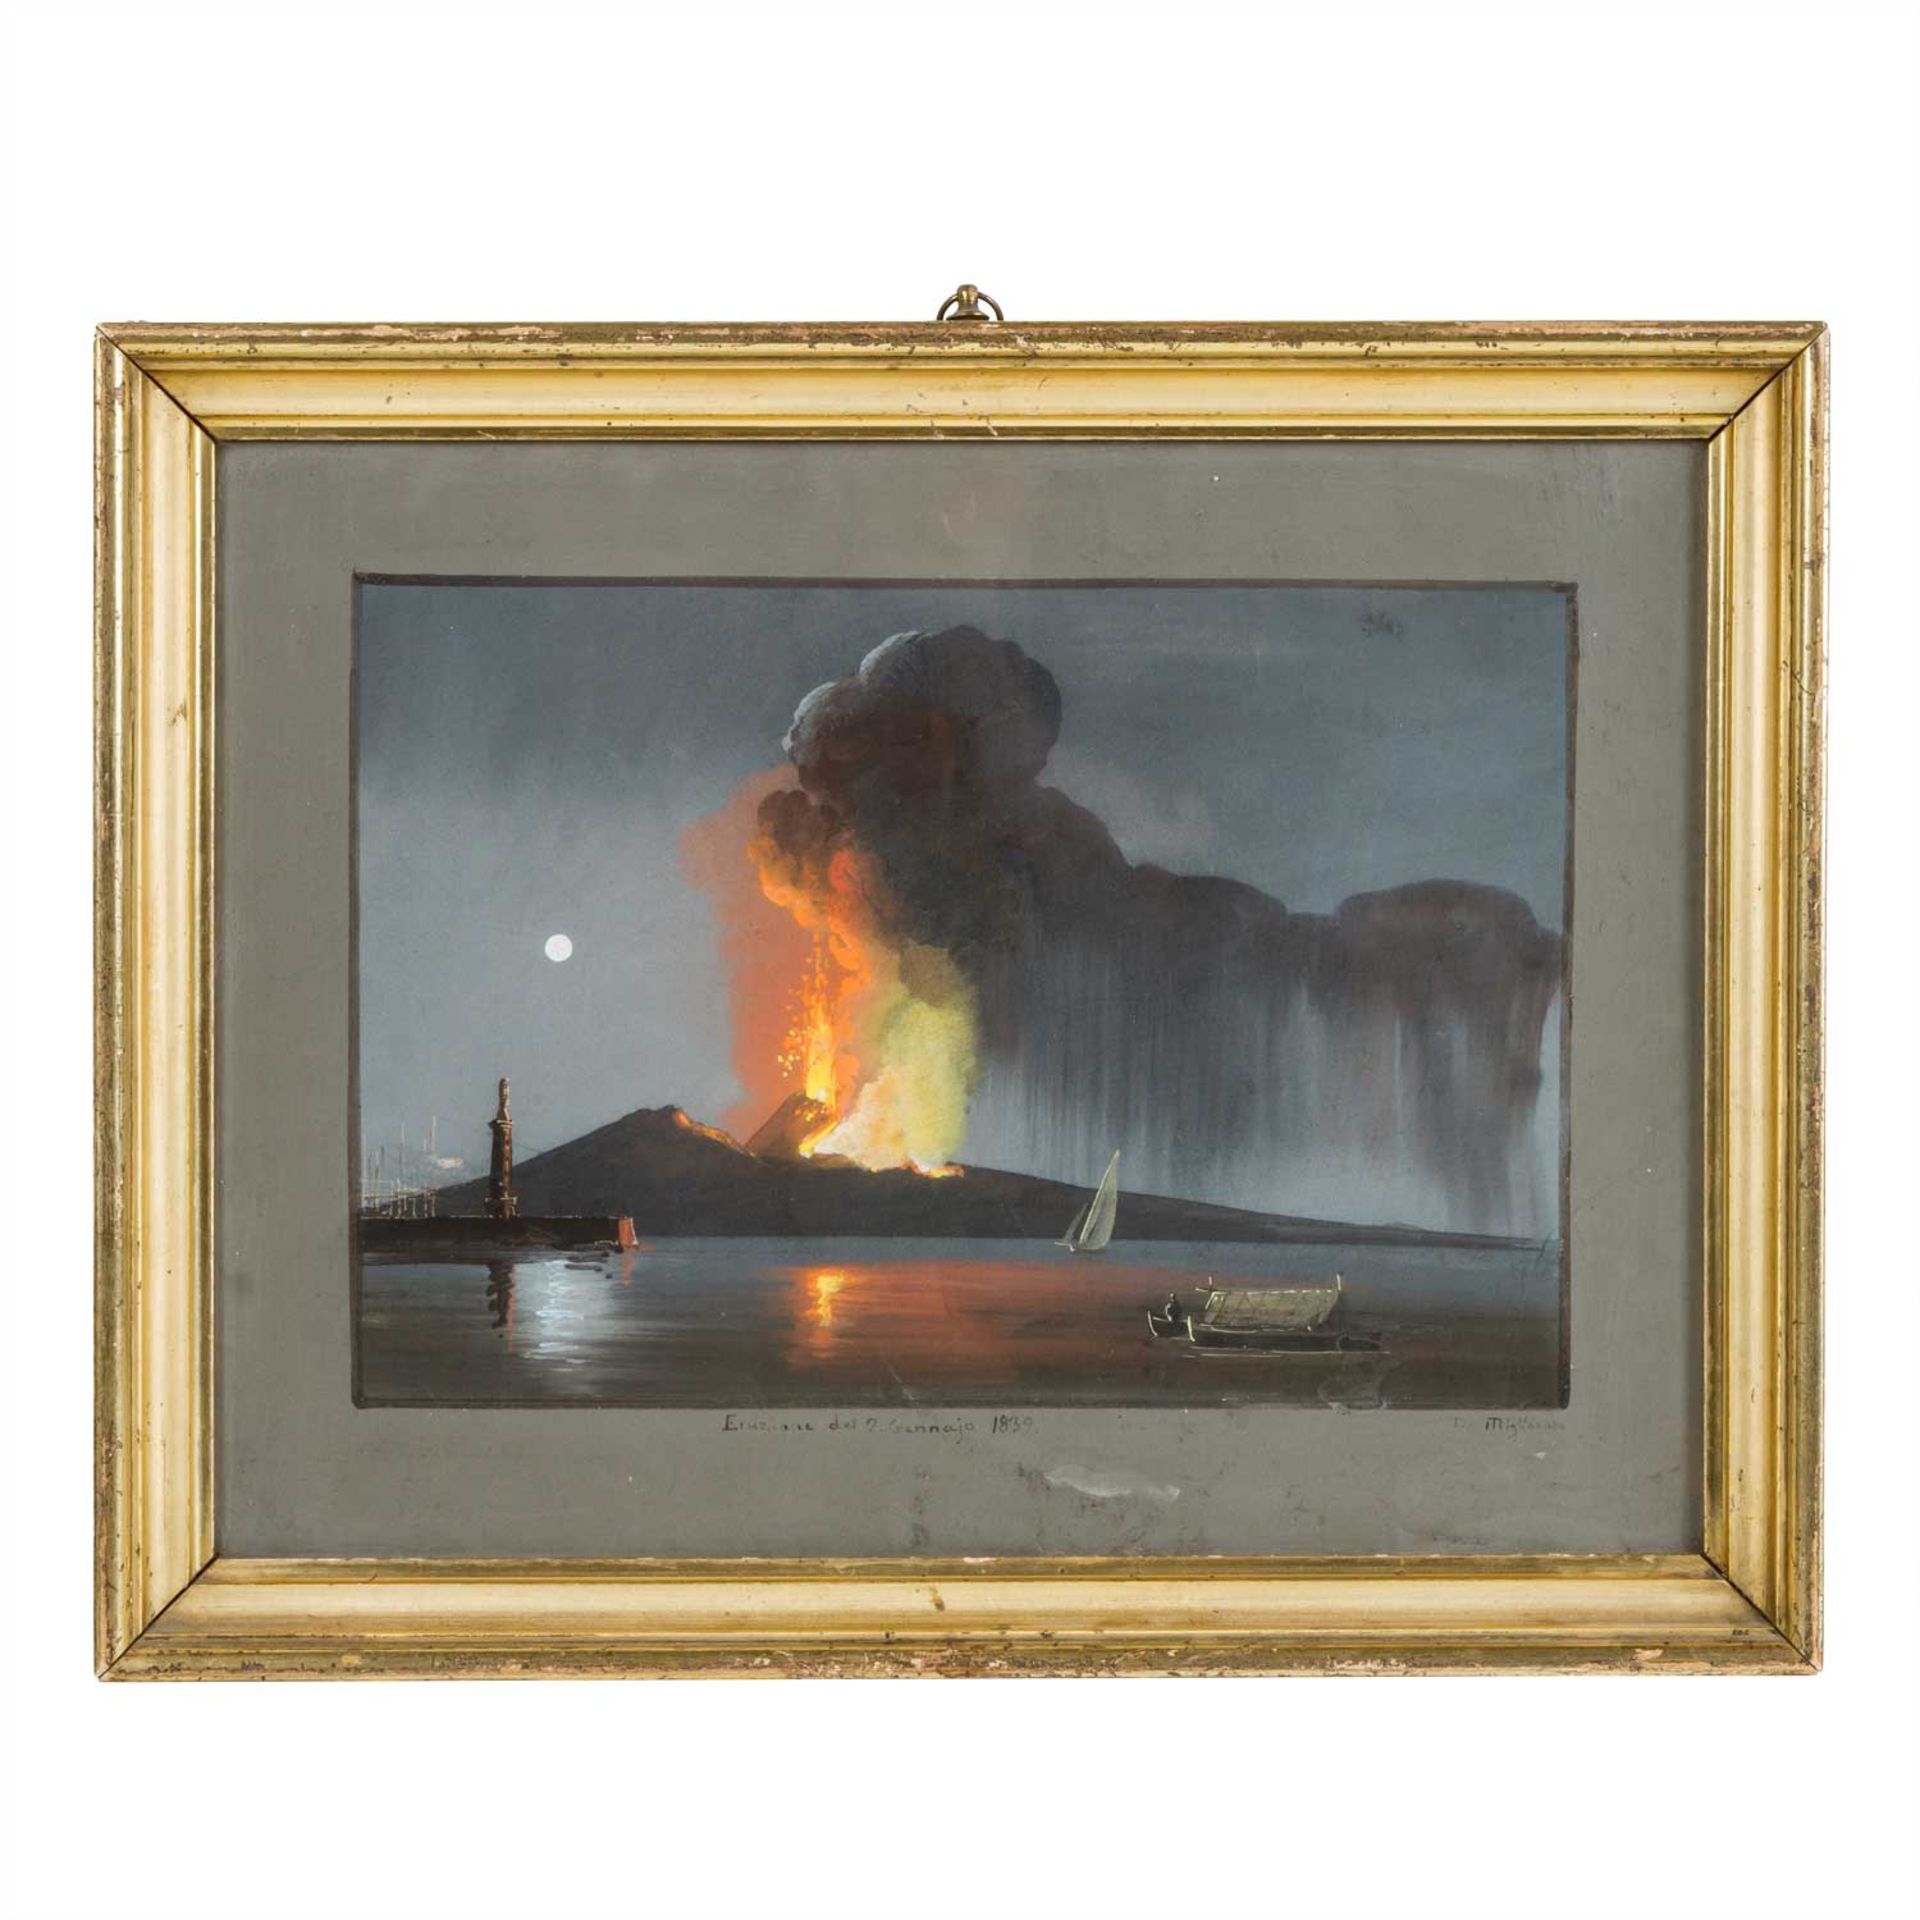 MIGLIORATO, D. (Künstler 19. Jh.), "Eruzione dal 2. Gennajo 1839",Neapel, Ausbruch de - Bild 2 aus 5